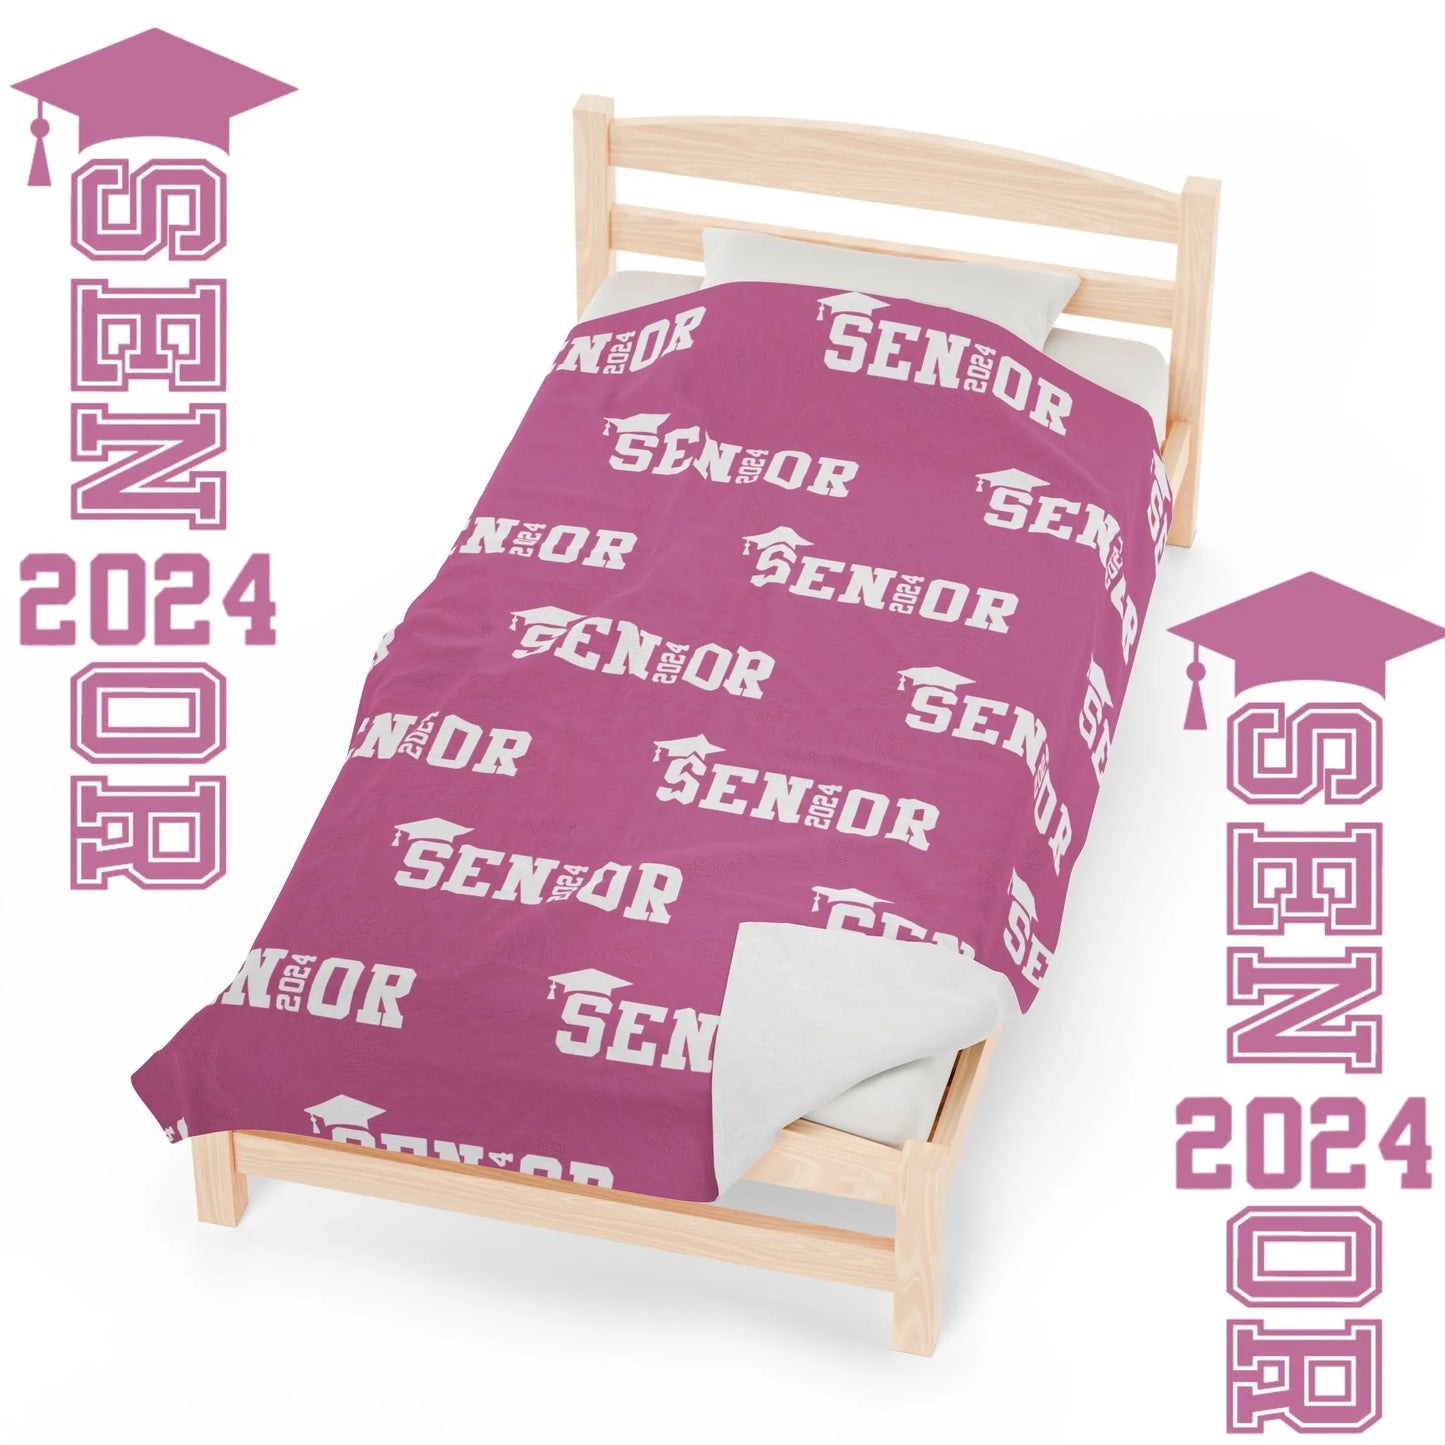 Class of 2024 Celebration Throw Blanket: Personalized, Cozy, and Stylish - Senior 2024 Personalized Throw Blanket PinkClass of 2024 Celebration Throw Blanket: Personalized, Cozy, and Stylish - Senior 2024 Personalized Throw Blanket Pink